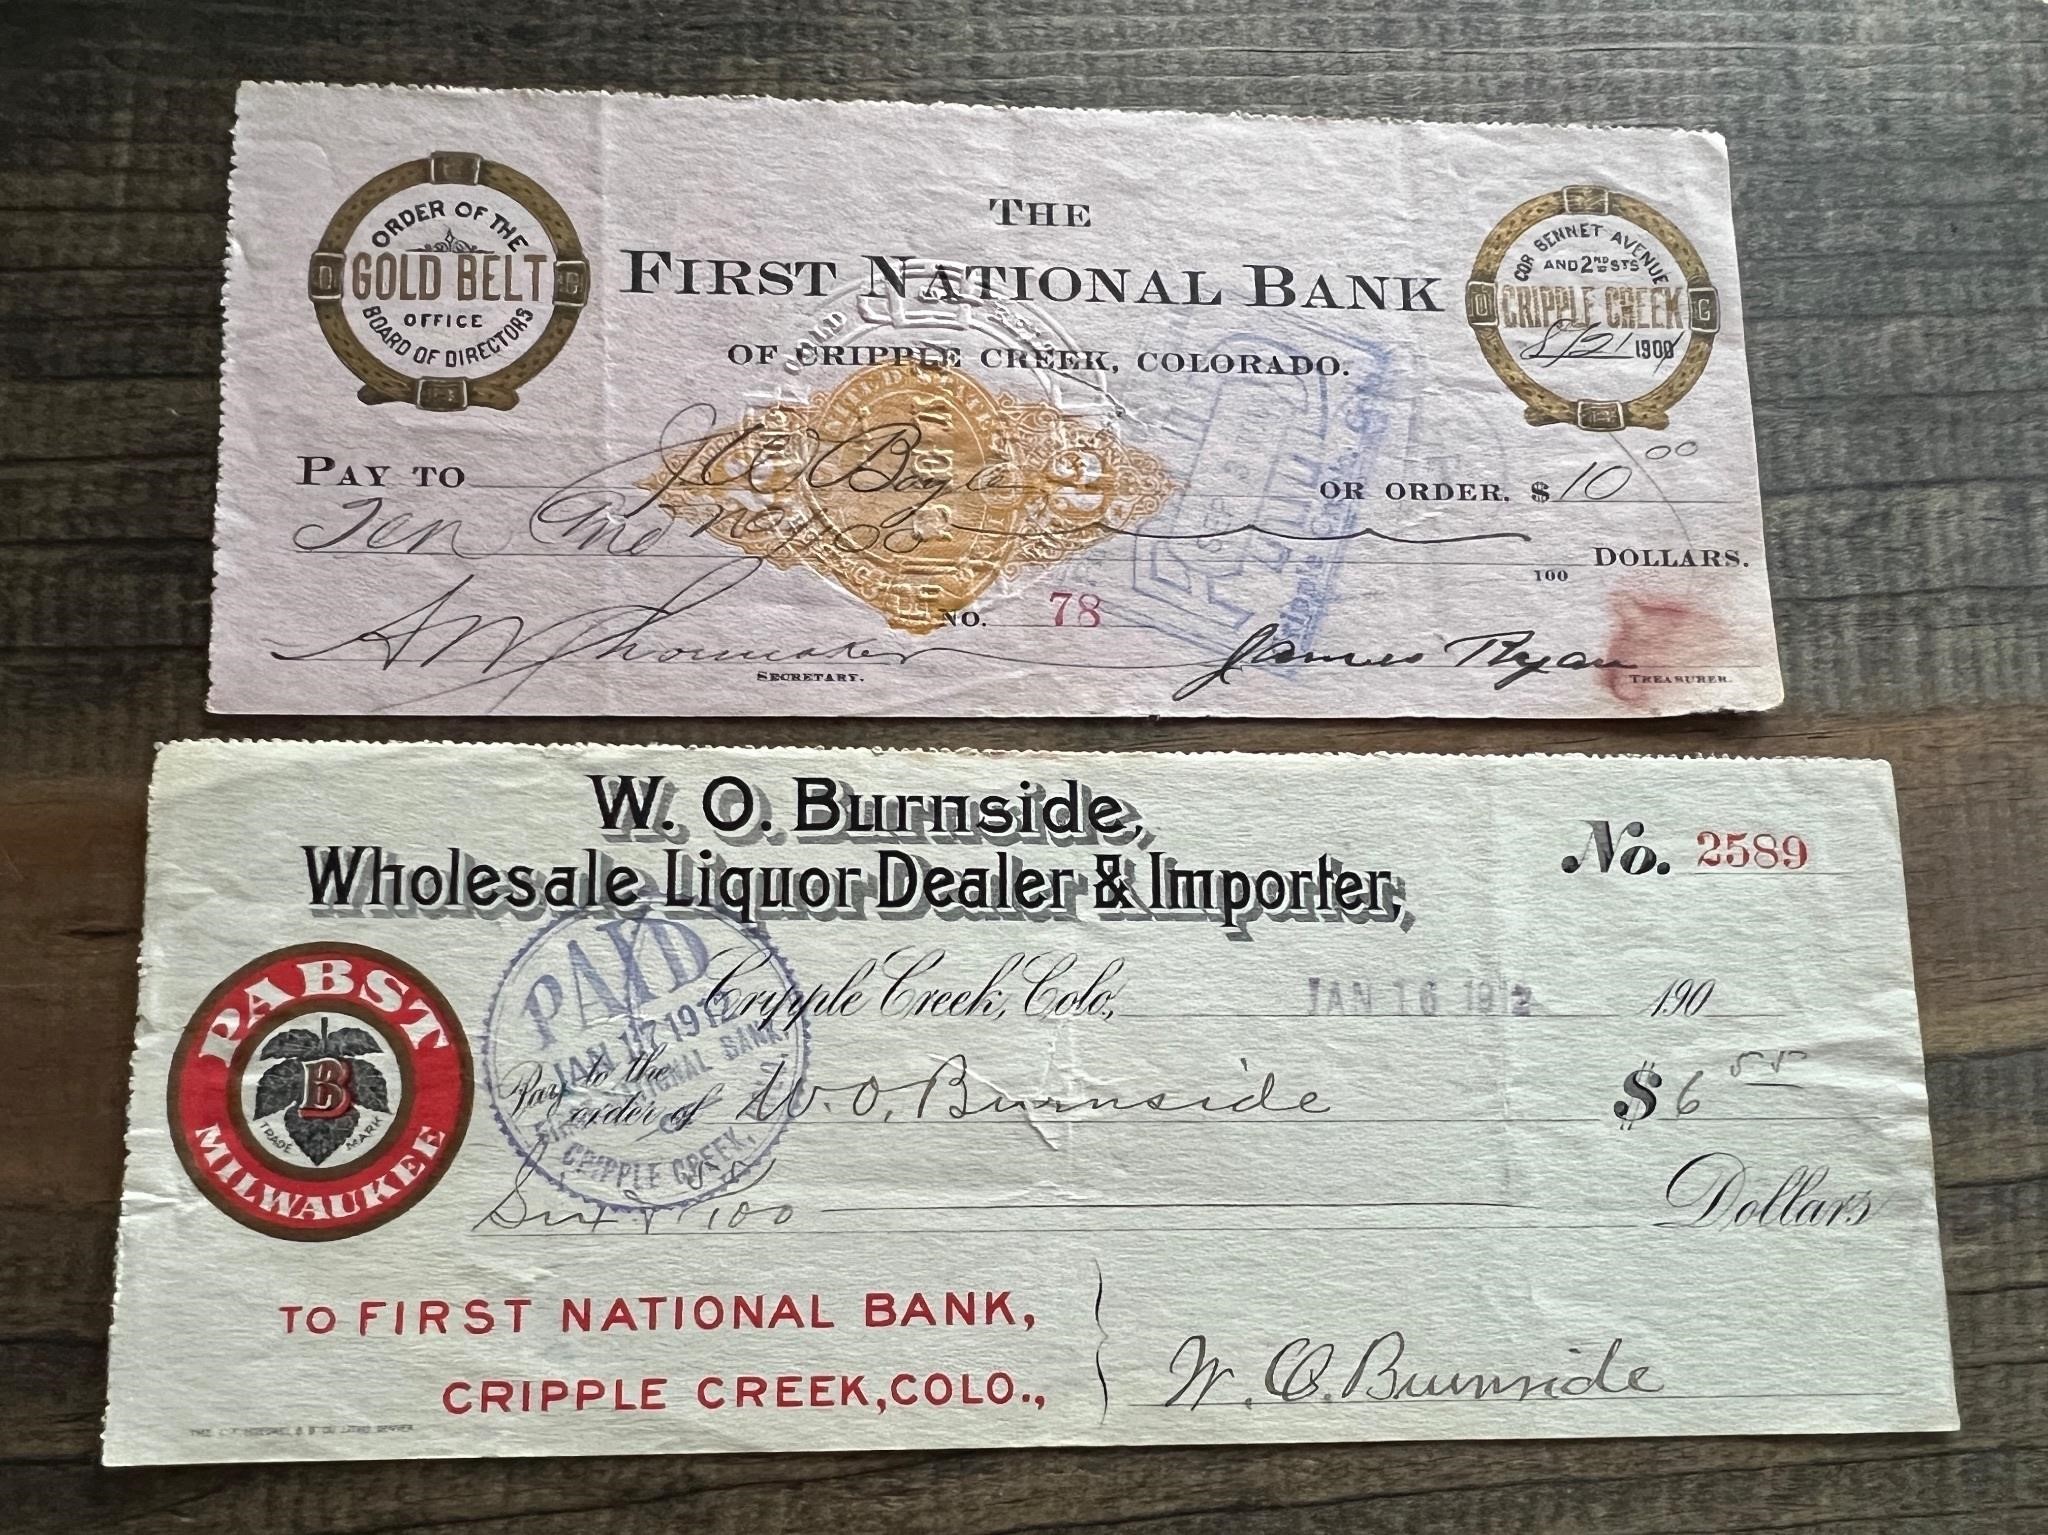 Cripple Creek Colorado Checks From 1900 and 1912